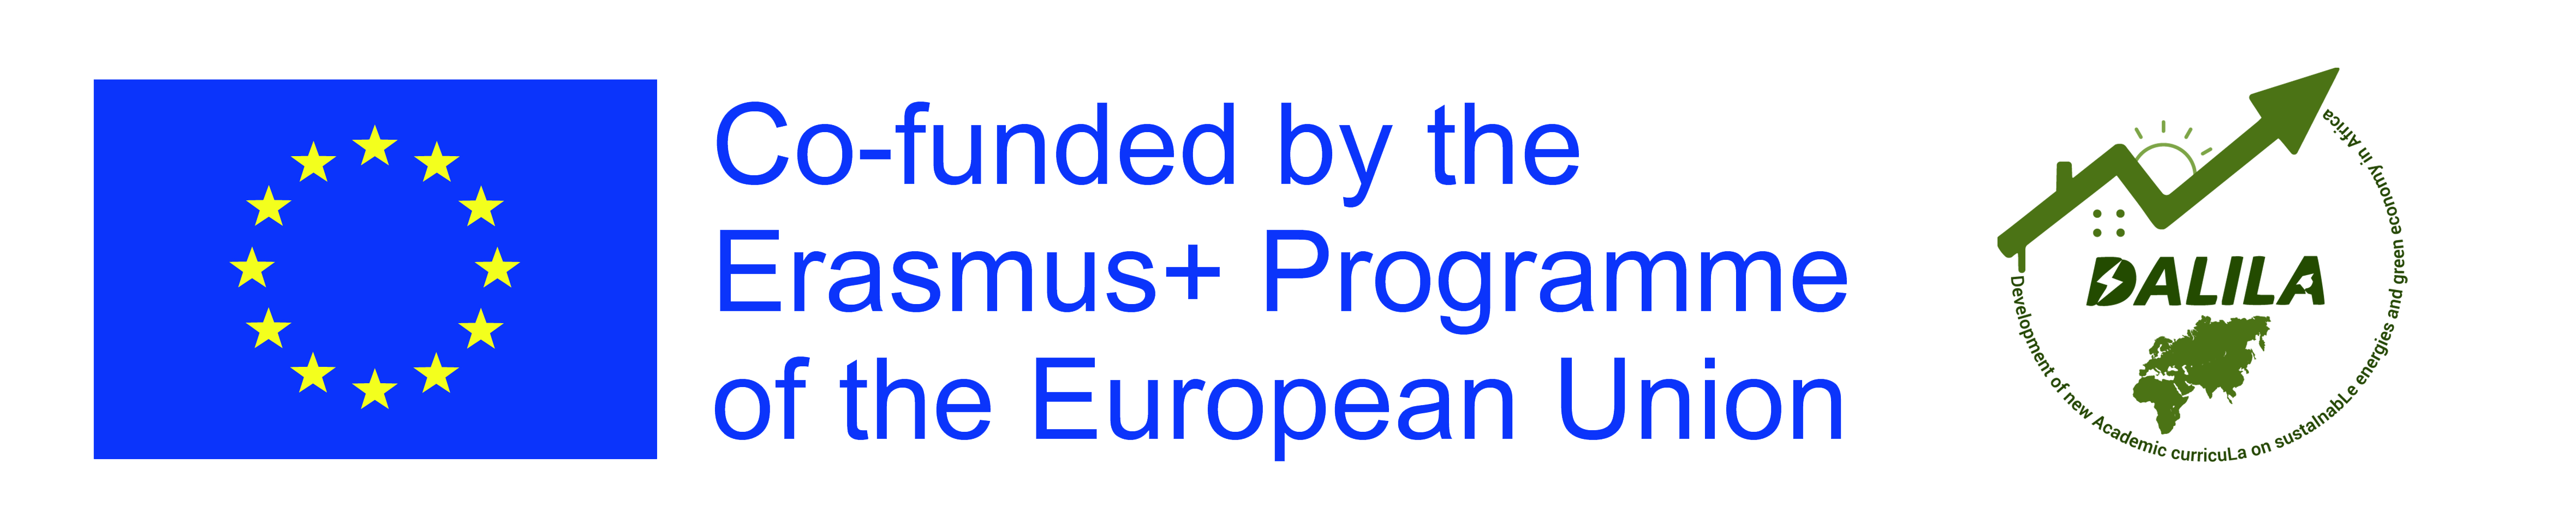 logo-dalila-project-european-union